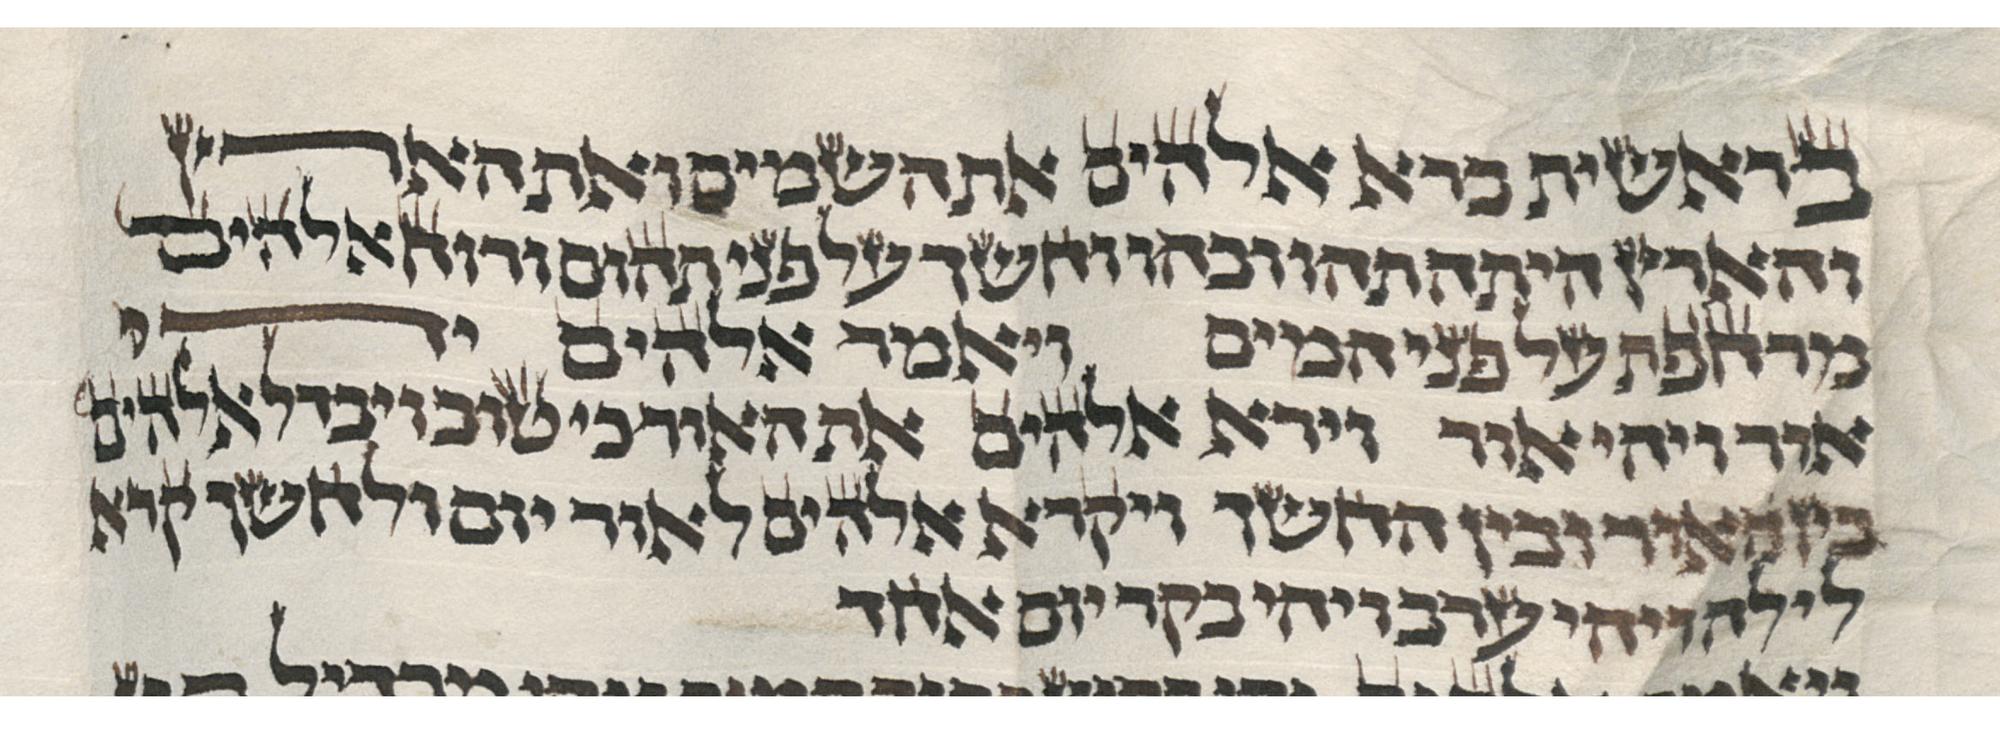 Ms. or. fol. 1216, Blatt 1, das Schriftbild